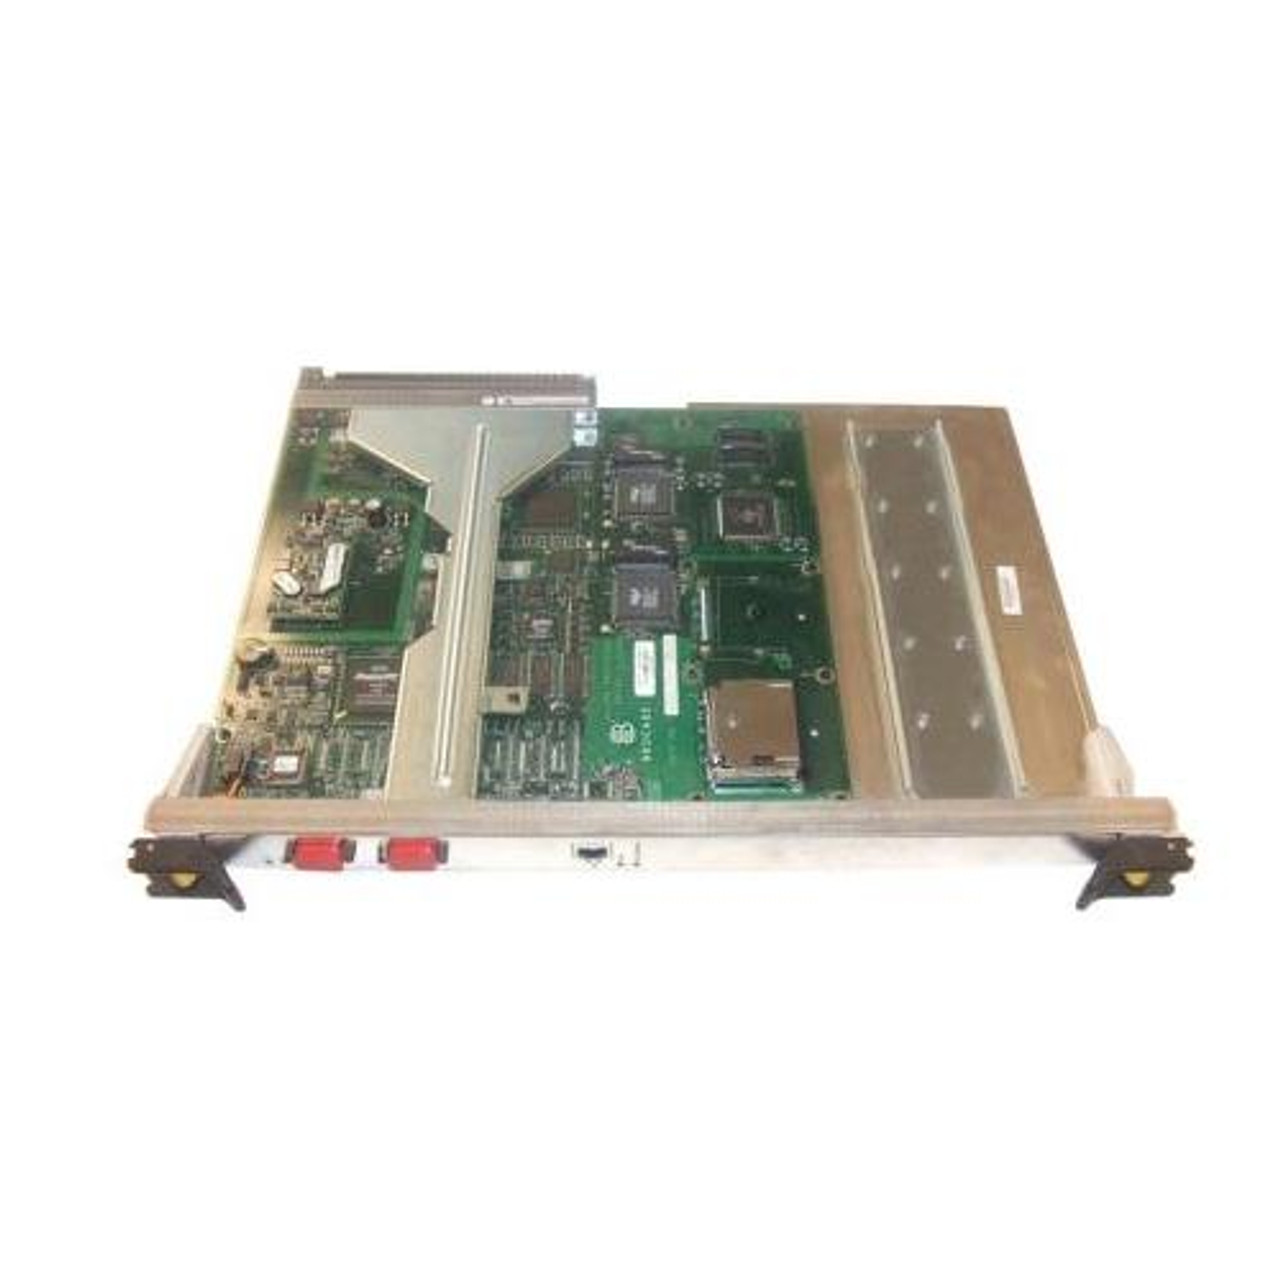 283803-001 HP 2/64 Switch Processor Controller Board